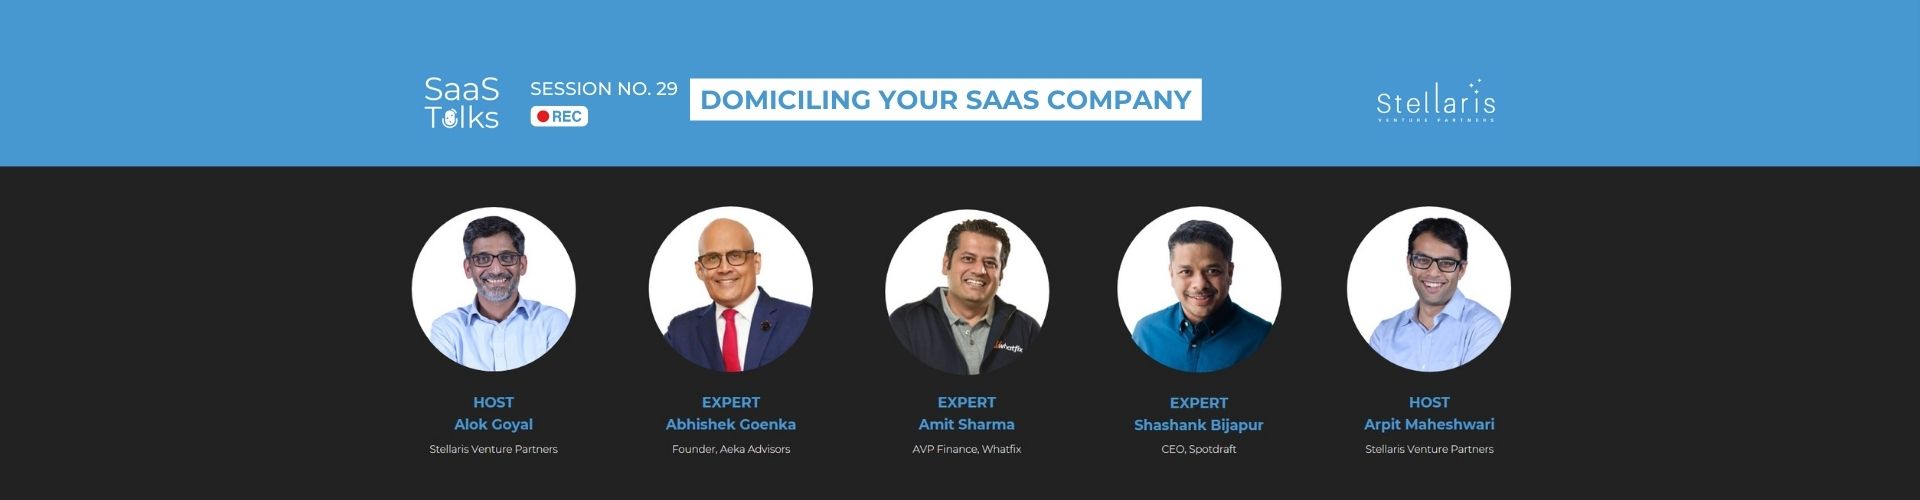 SaaS Talks #29: Domiciling your SaaS company